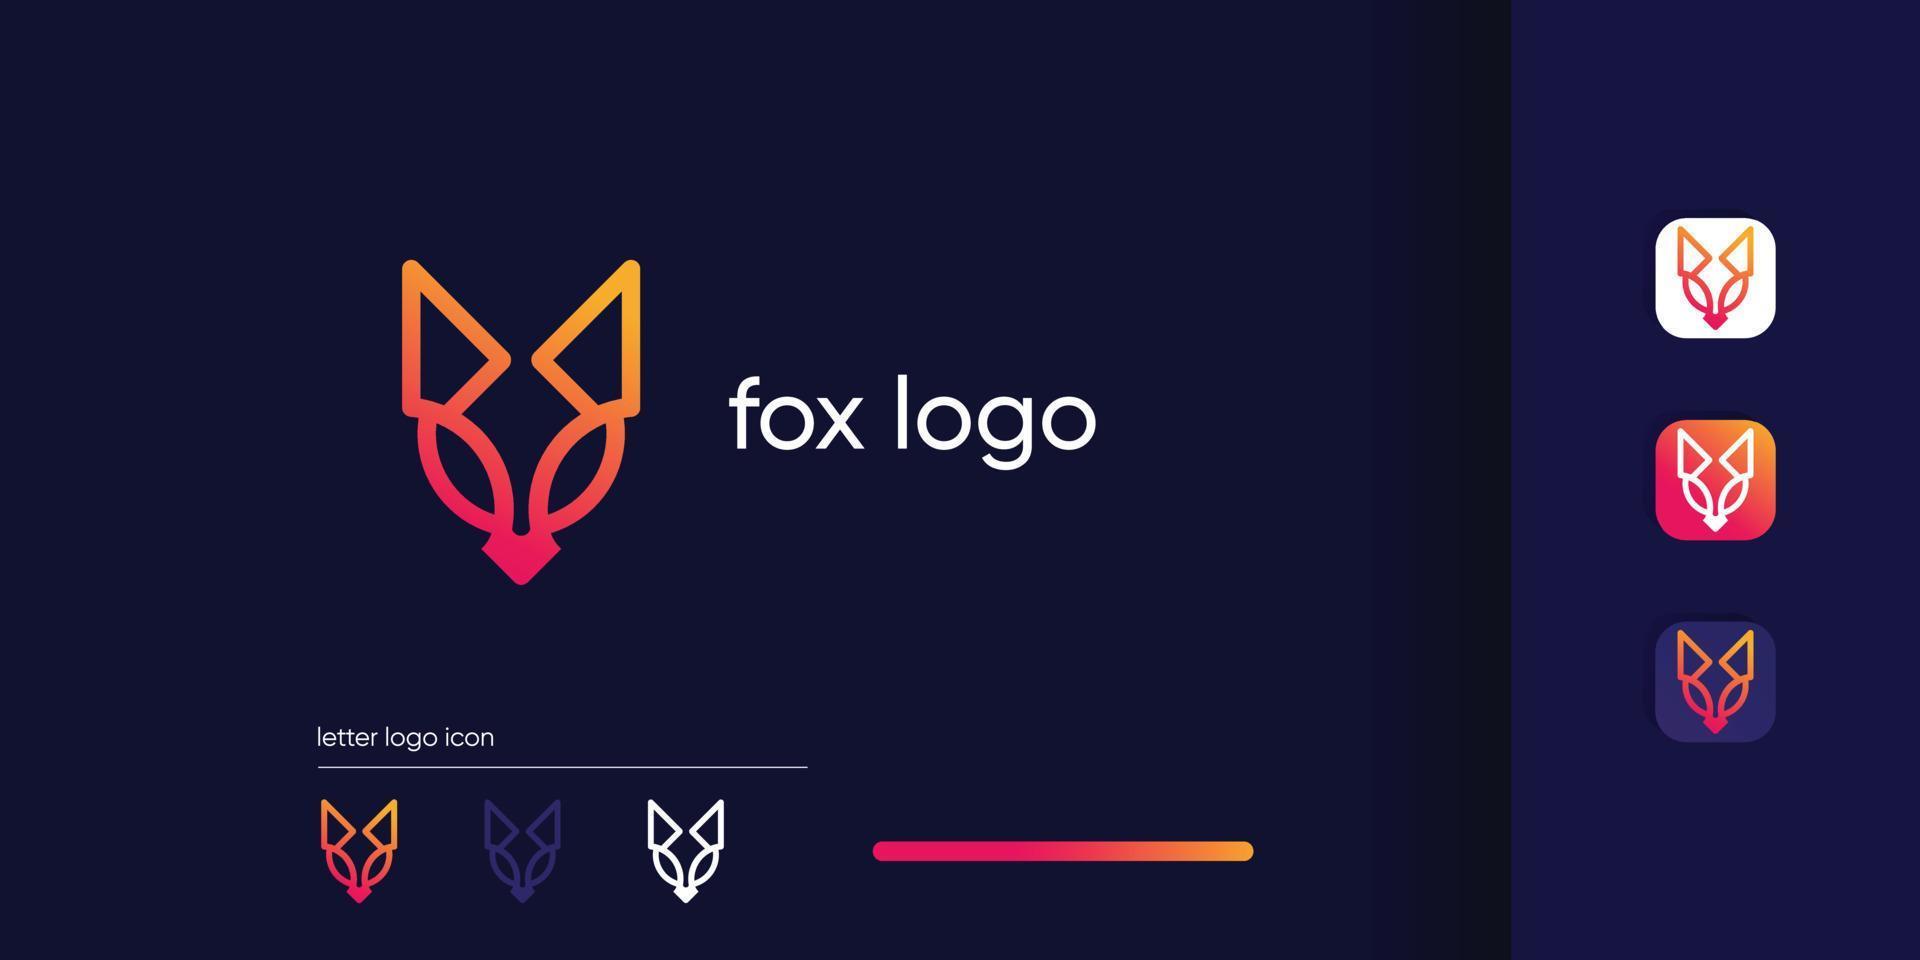 Fox logo design idea with simple and creative concept vector